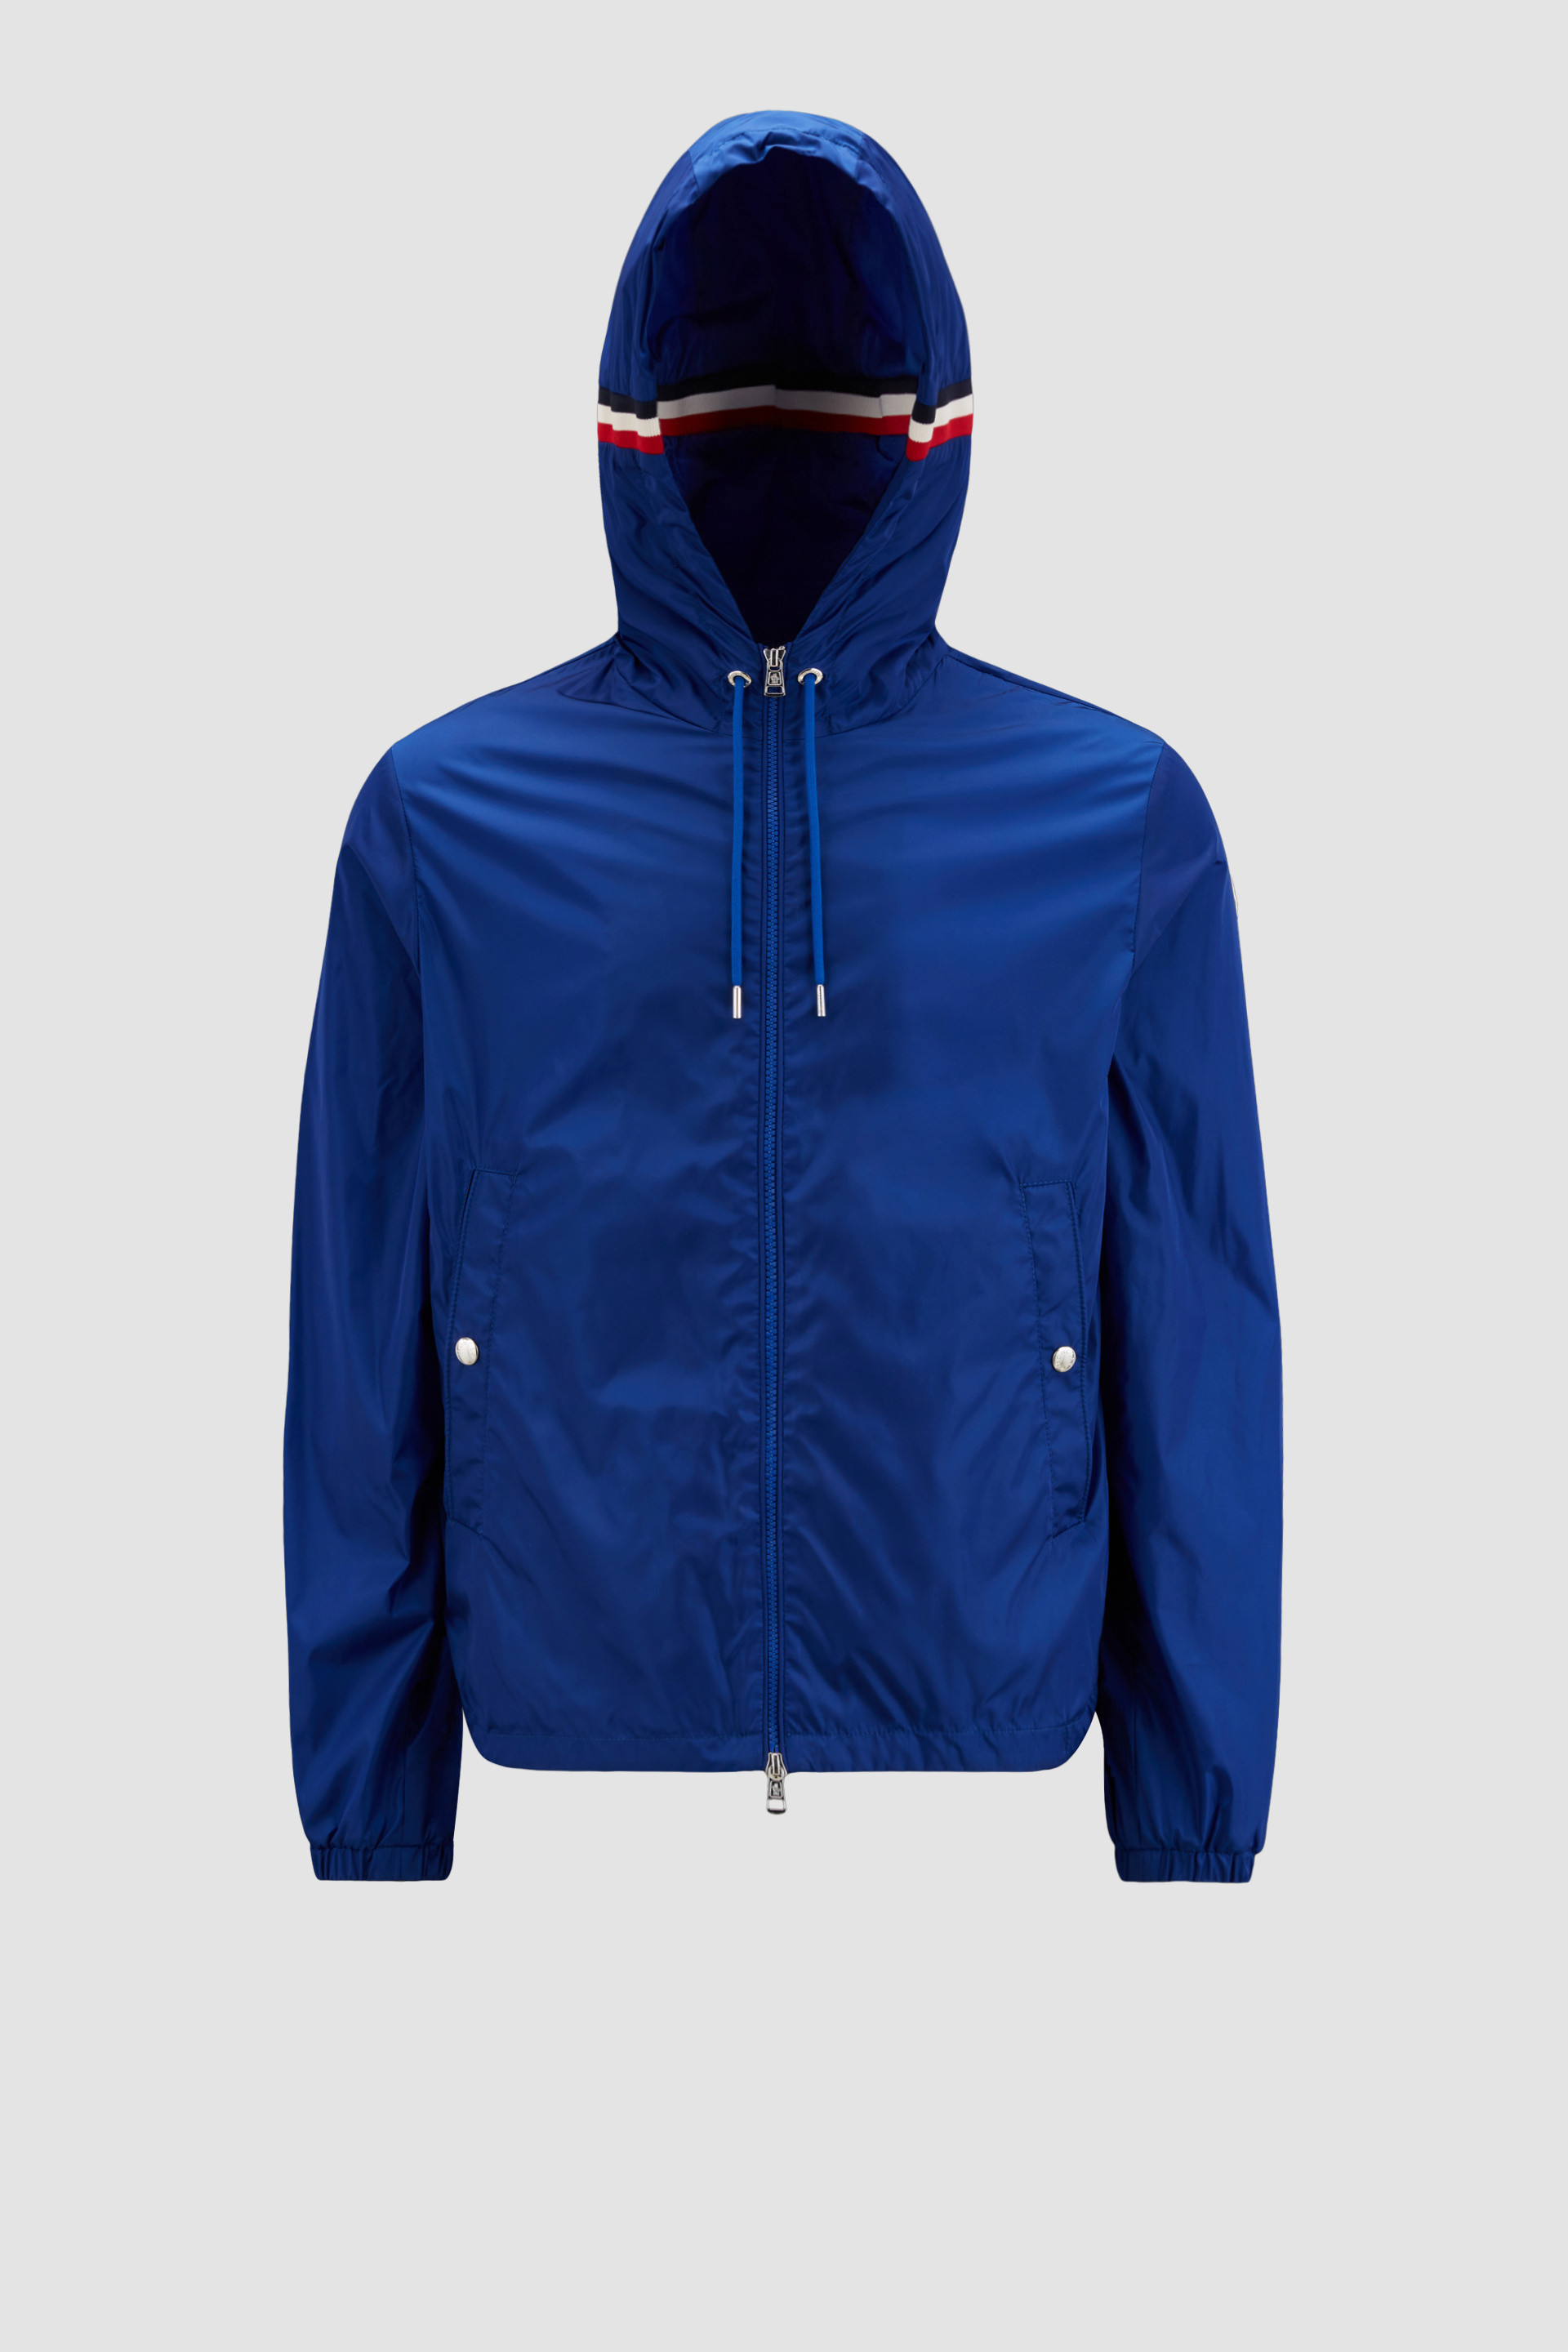 Electric Blue Grimpeurs Hooded Jacket - Windbreakers & Raincoats 